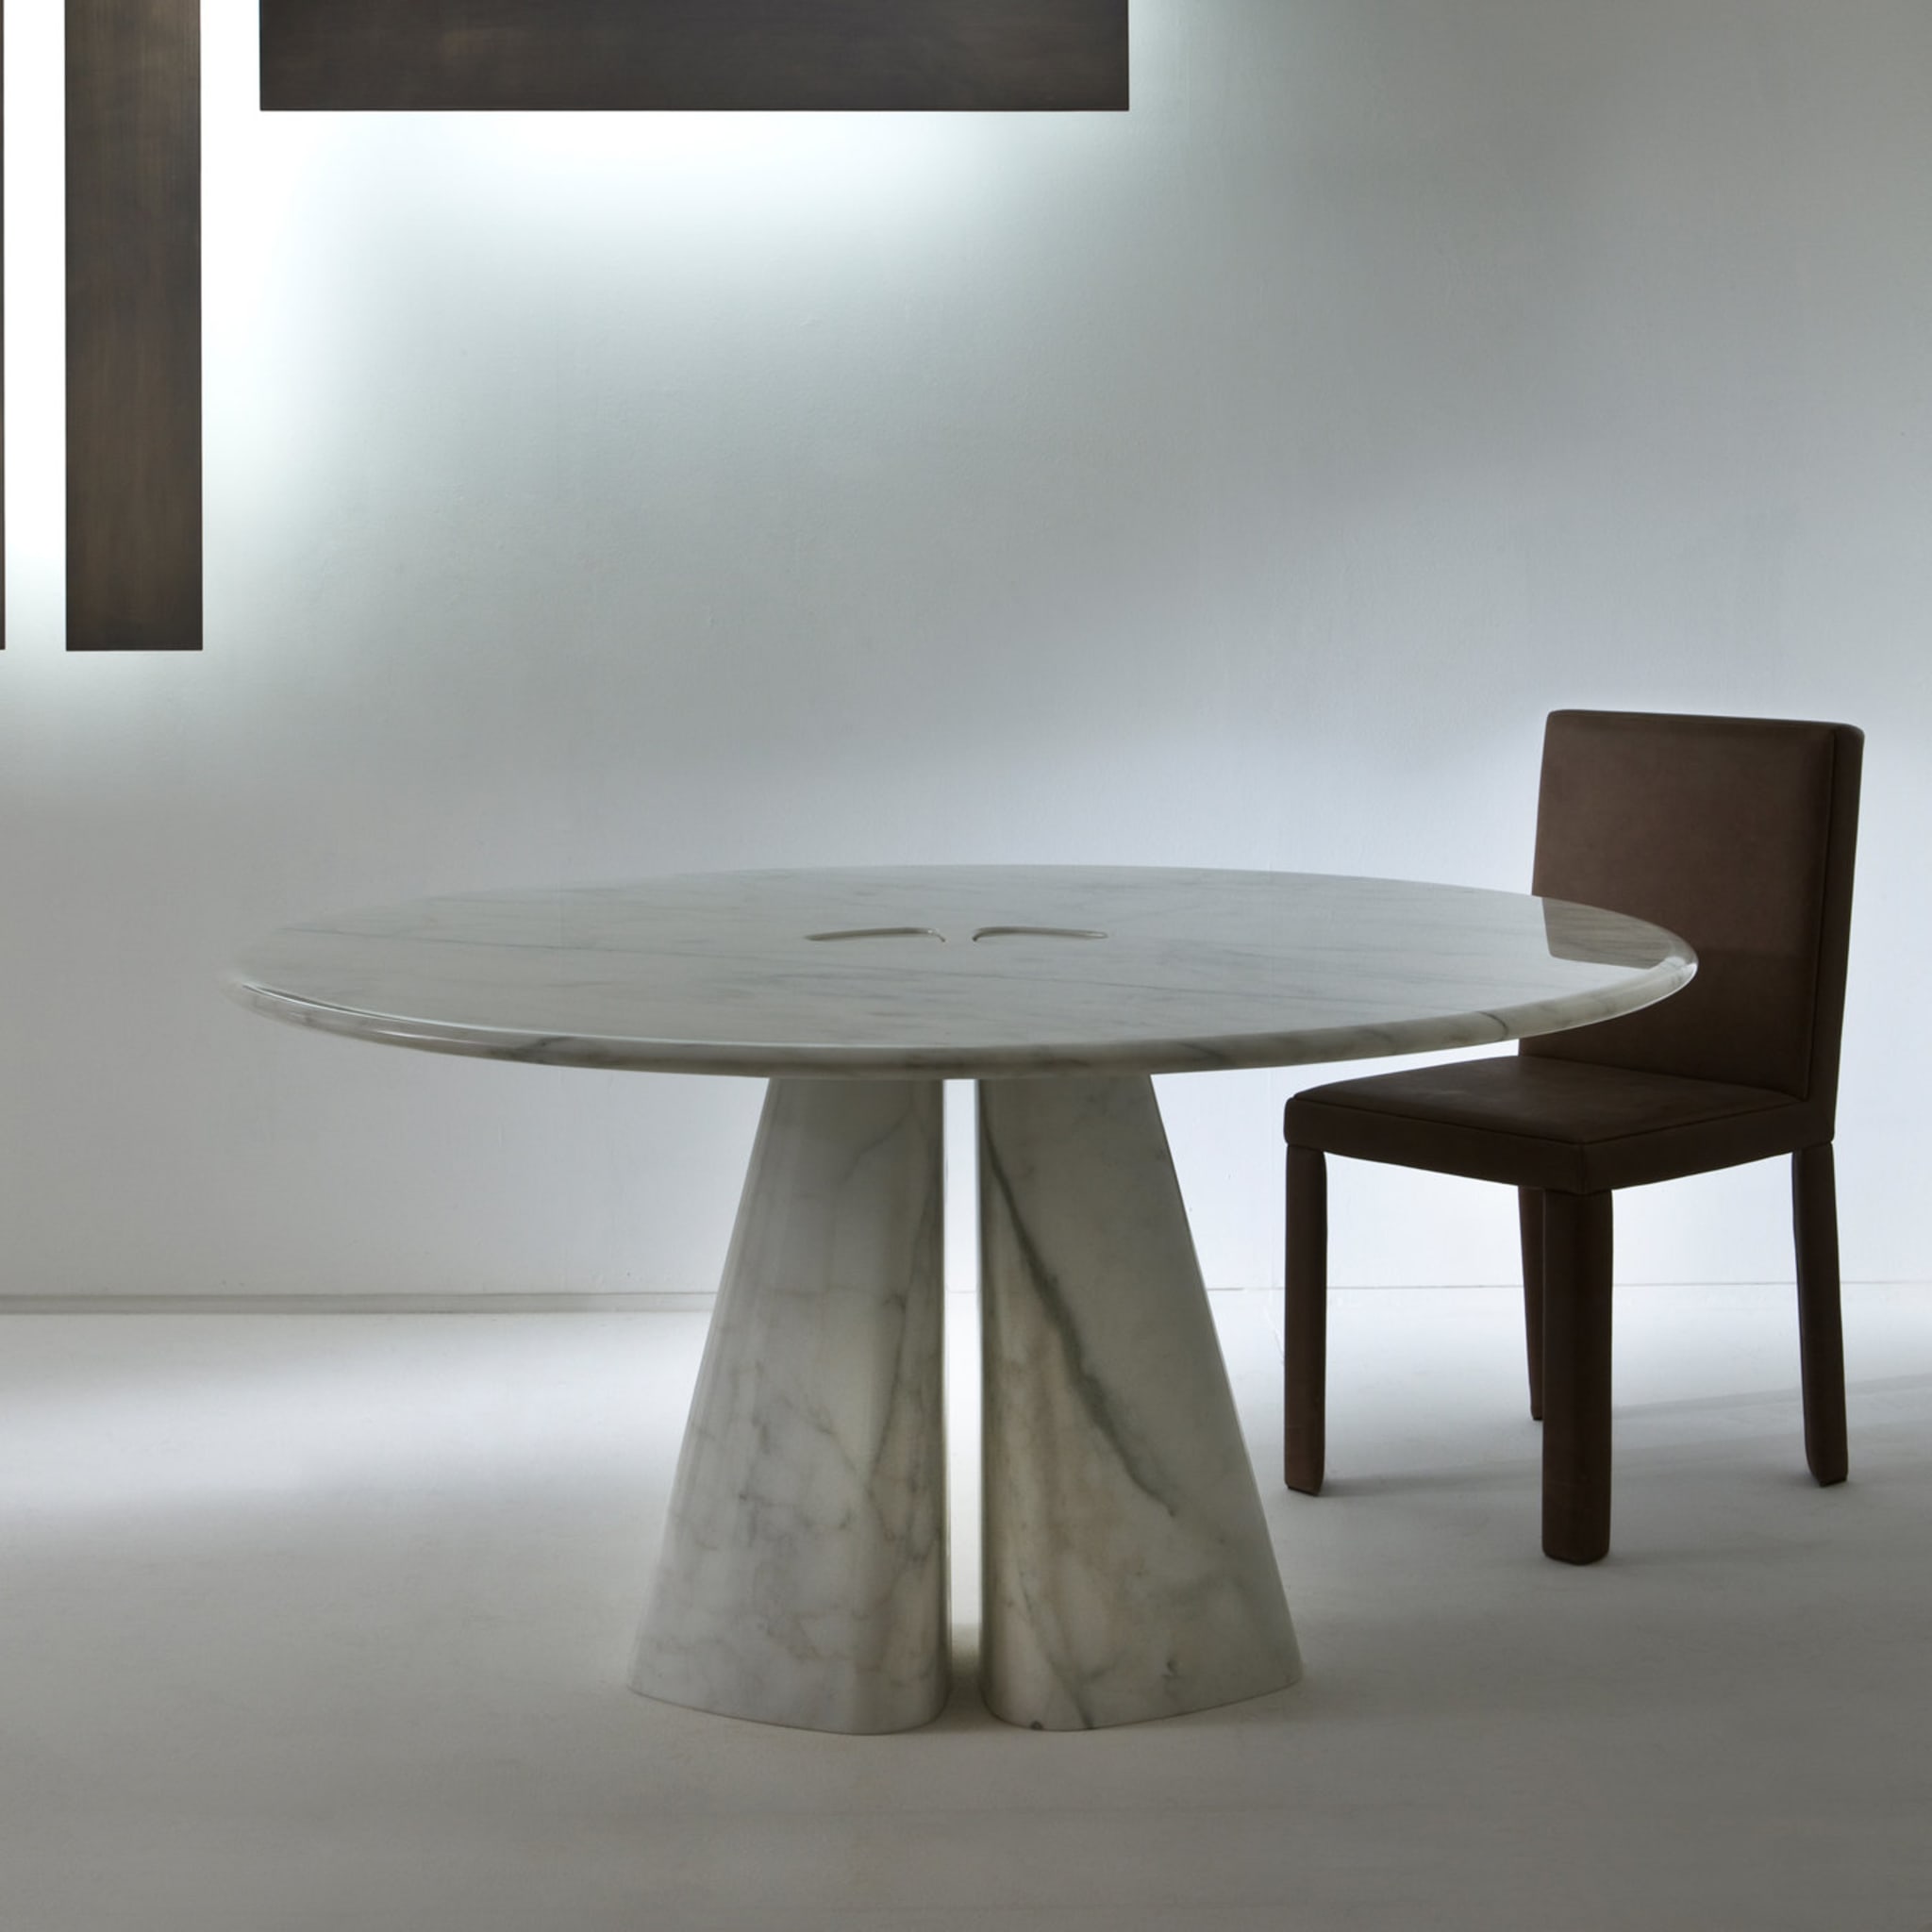 Raja Round Table by Bartoli Design - Alternative view 1